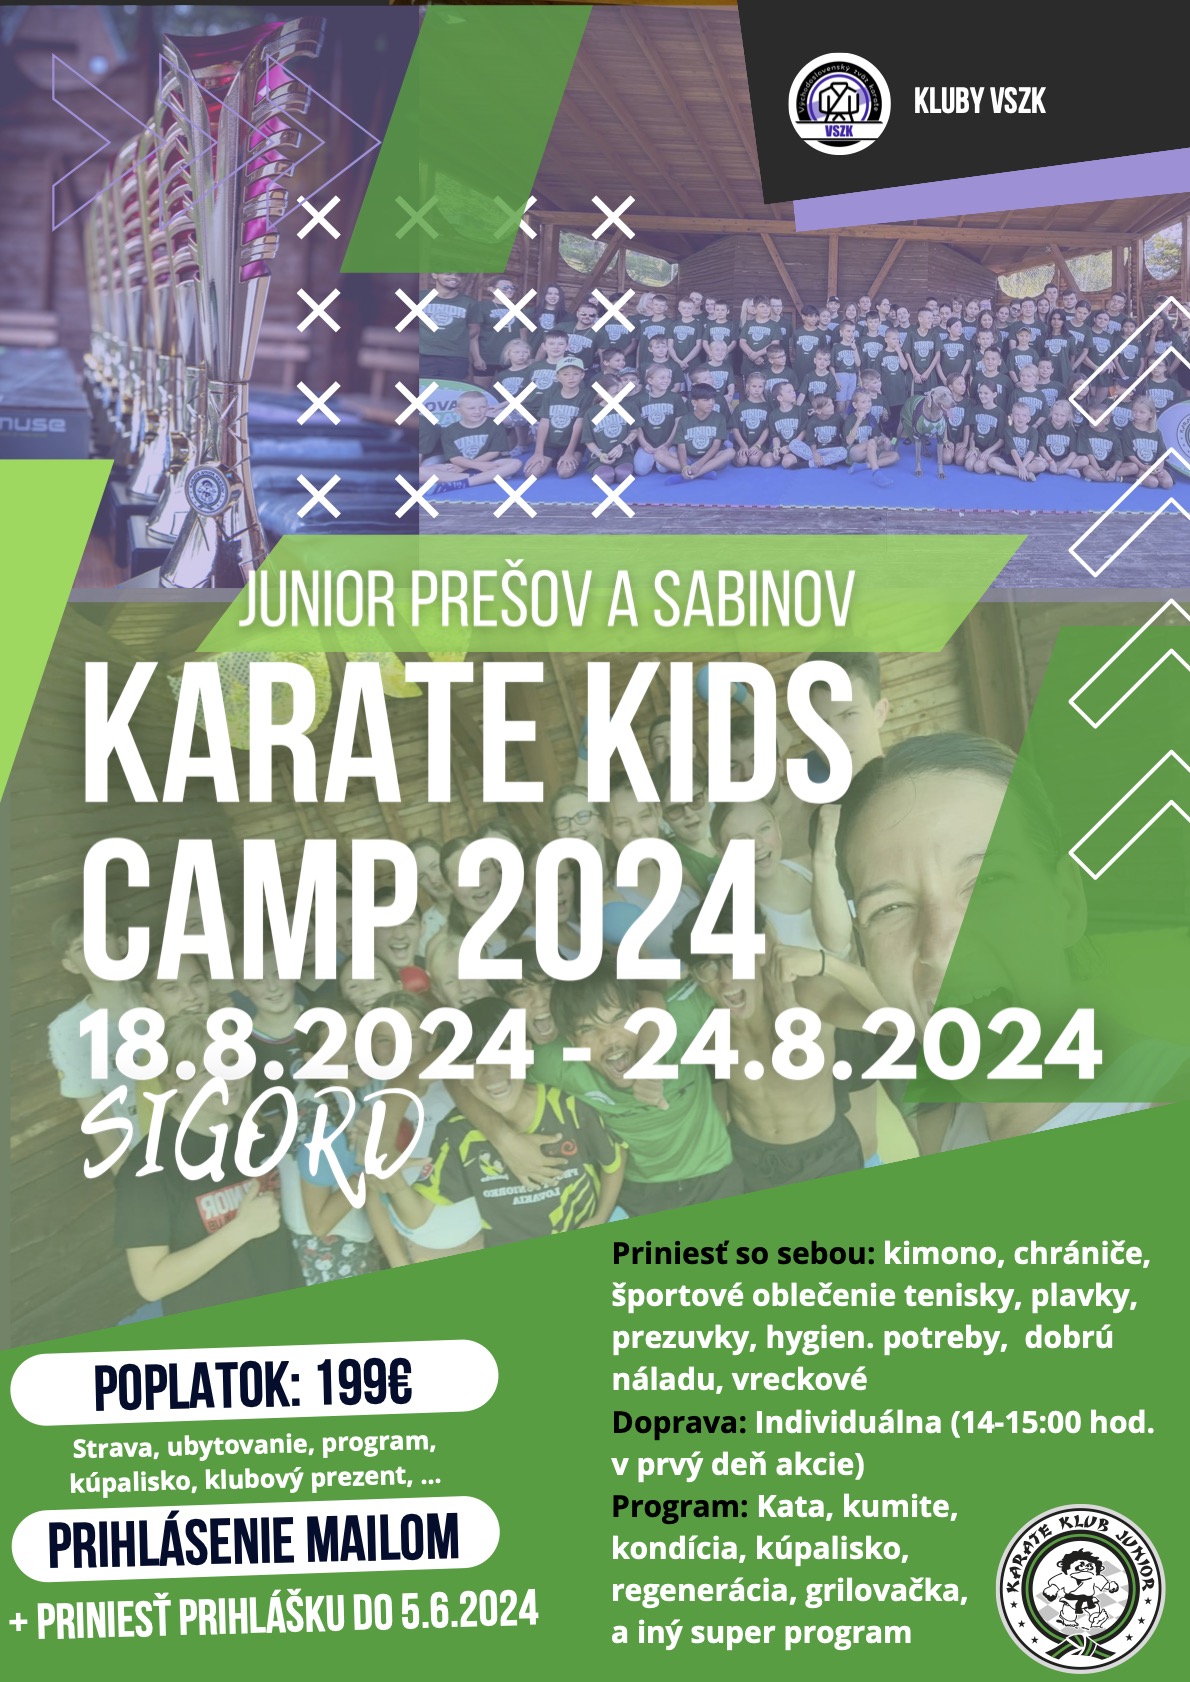 JPEG KARATE KIDS CAMP 2024 plagát .jpg